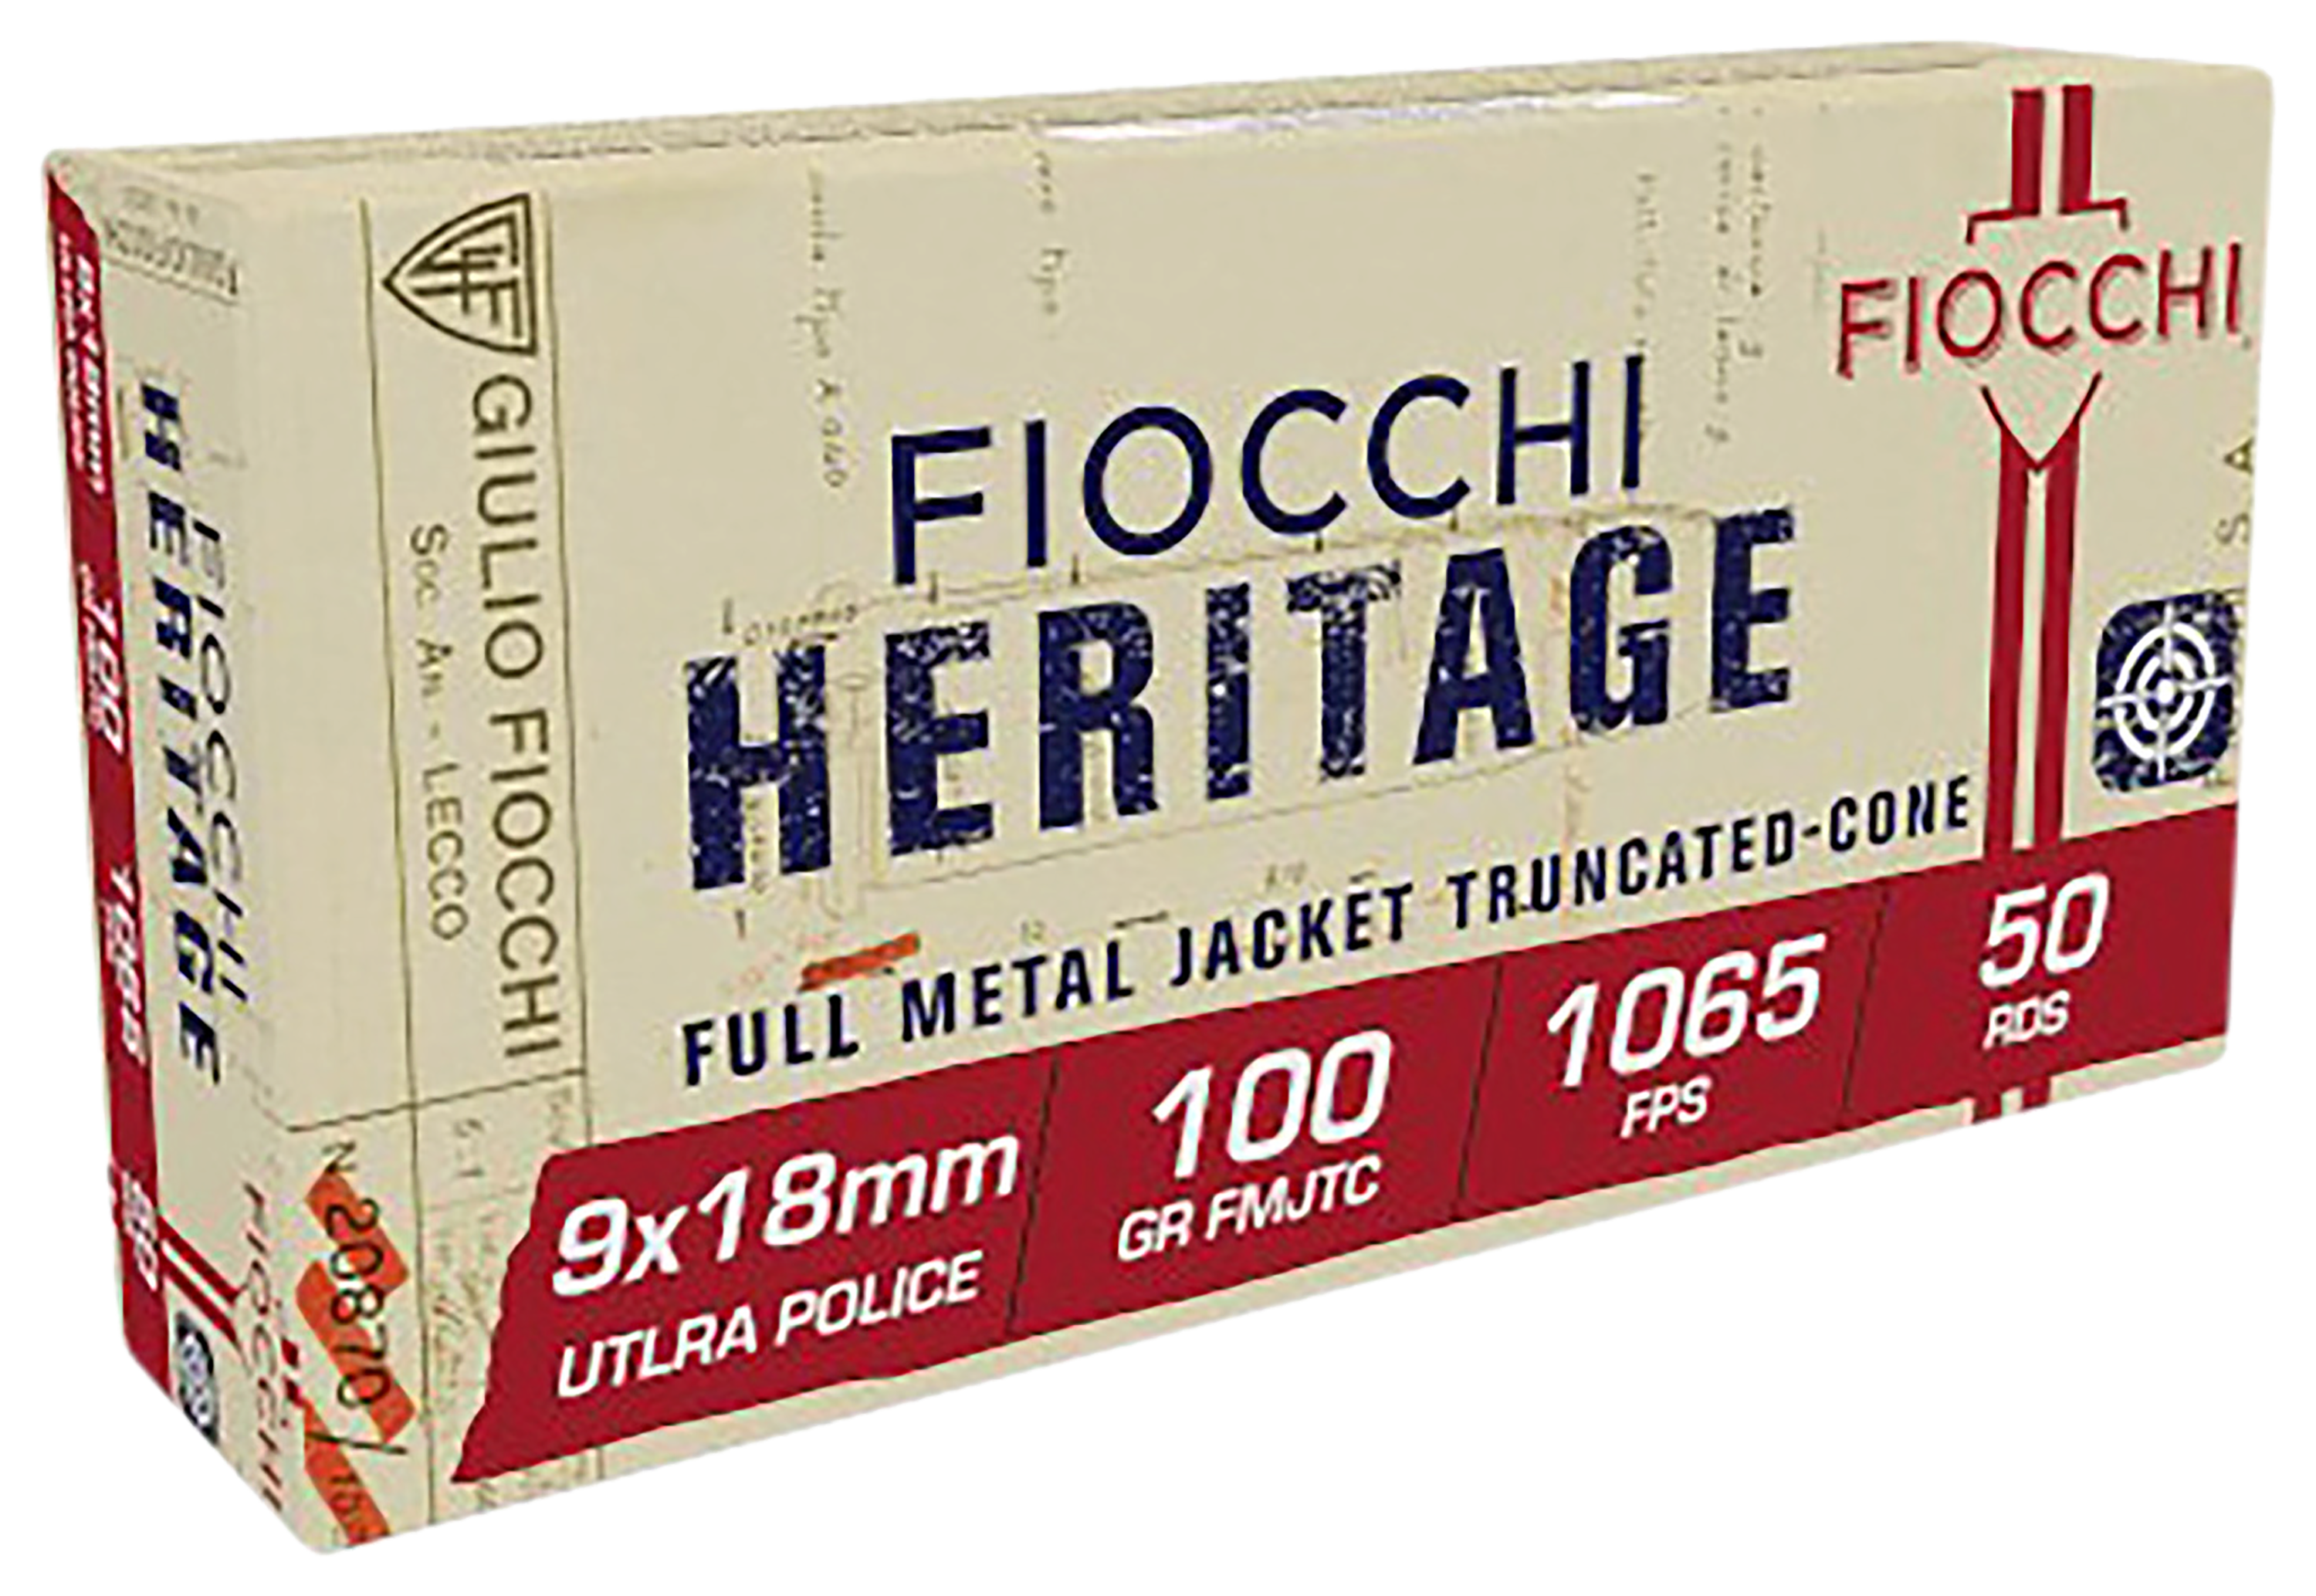 Fiocchi Specialty Classic Metal Case (FMJ) 9X18mm Ultra Police 100 Grain Handgun Ammo